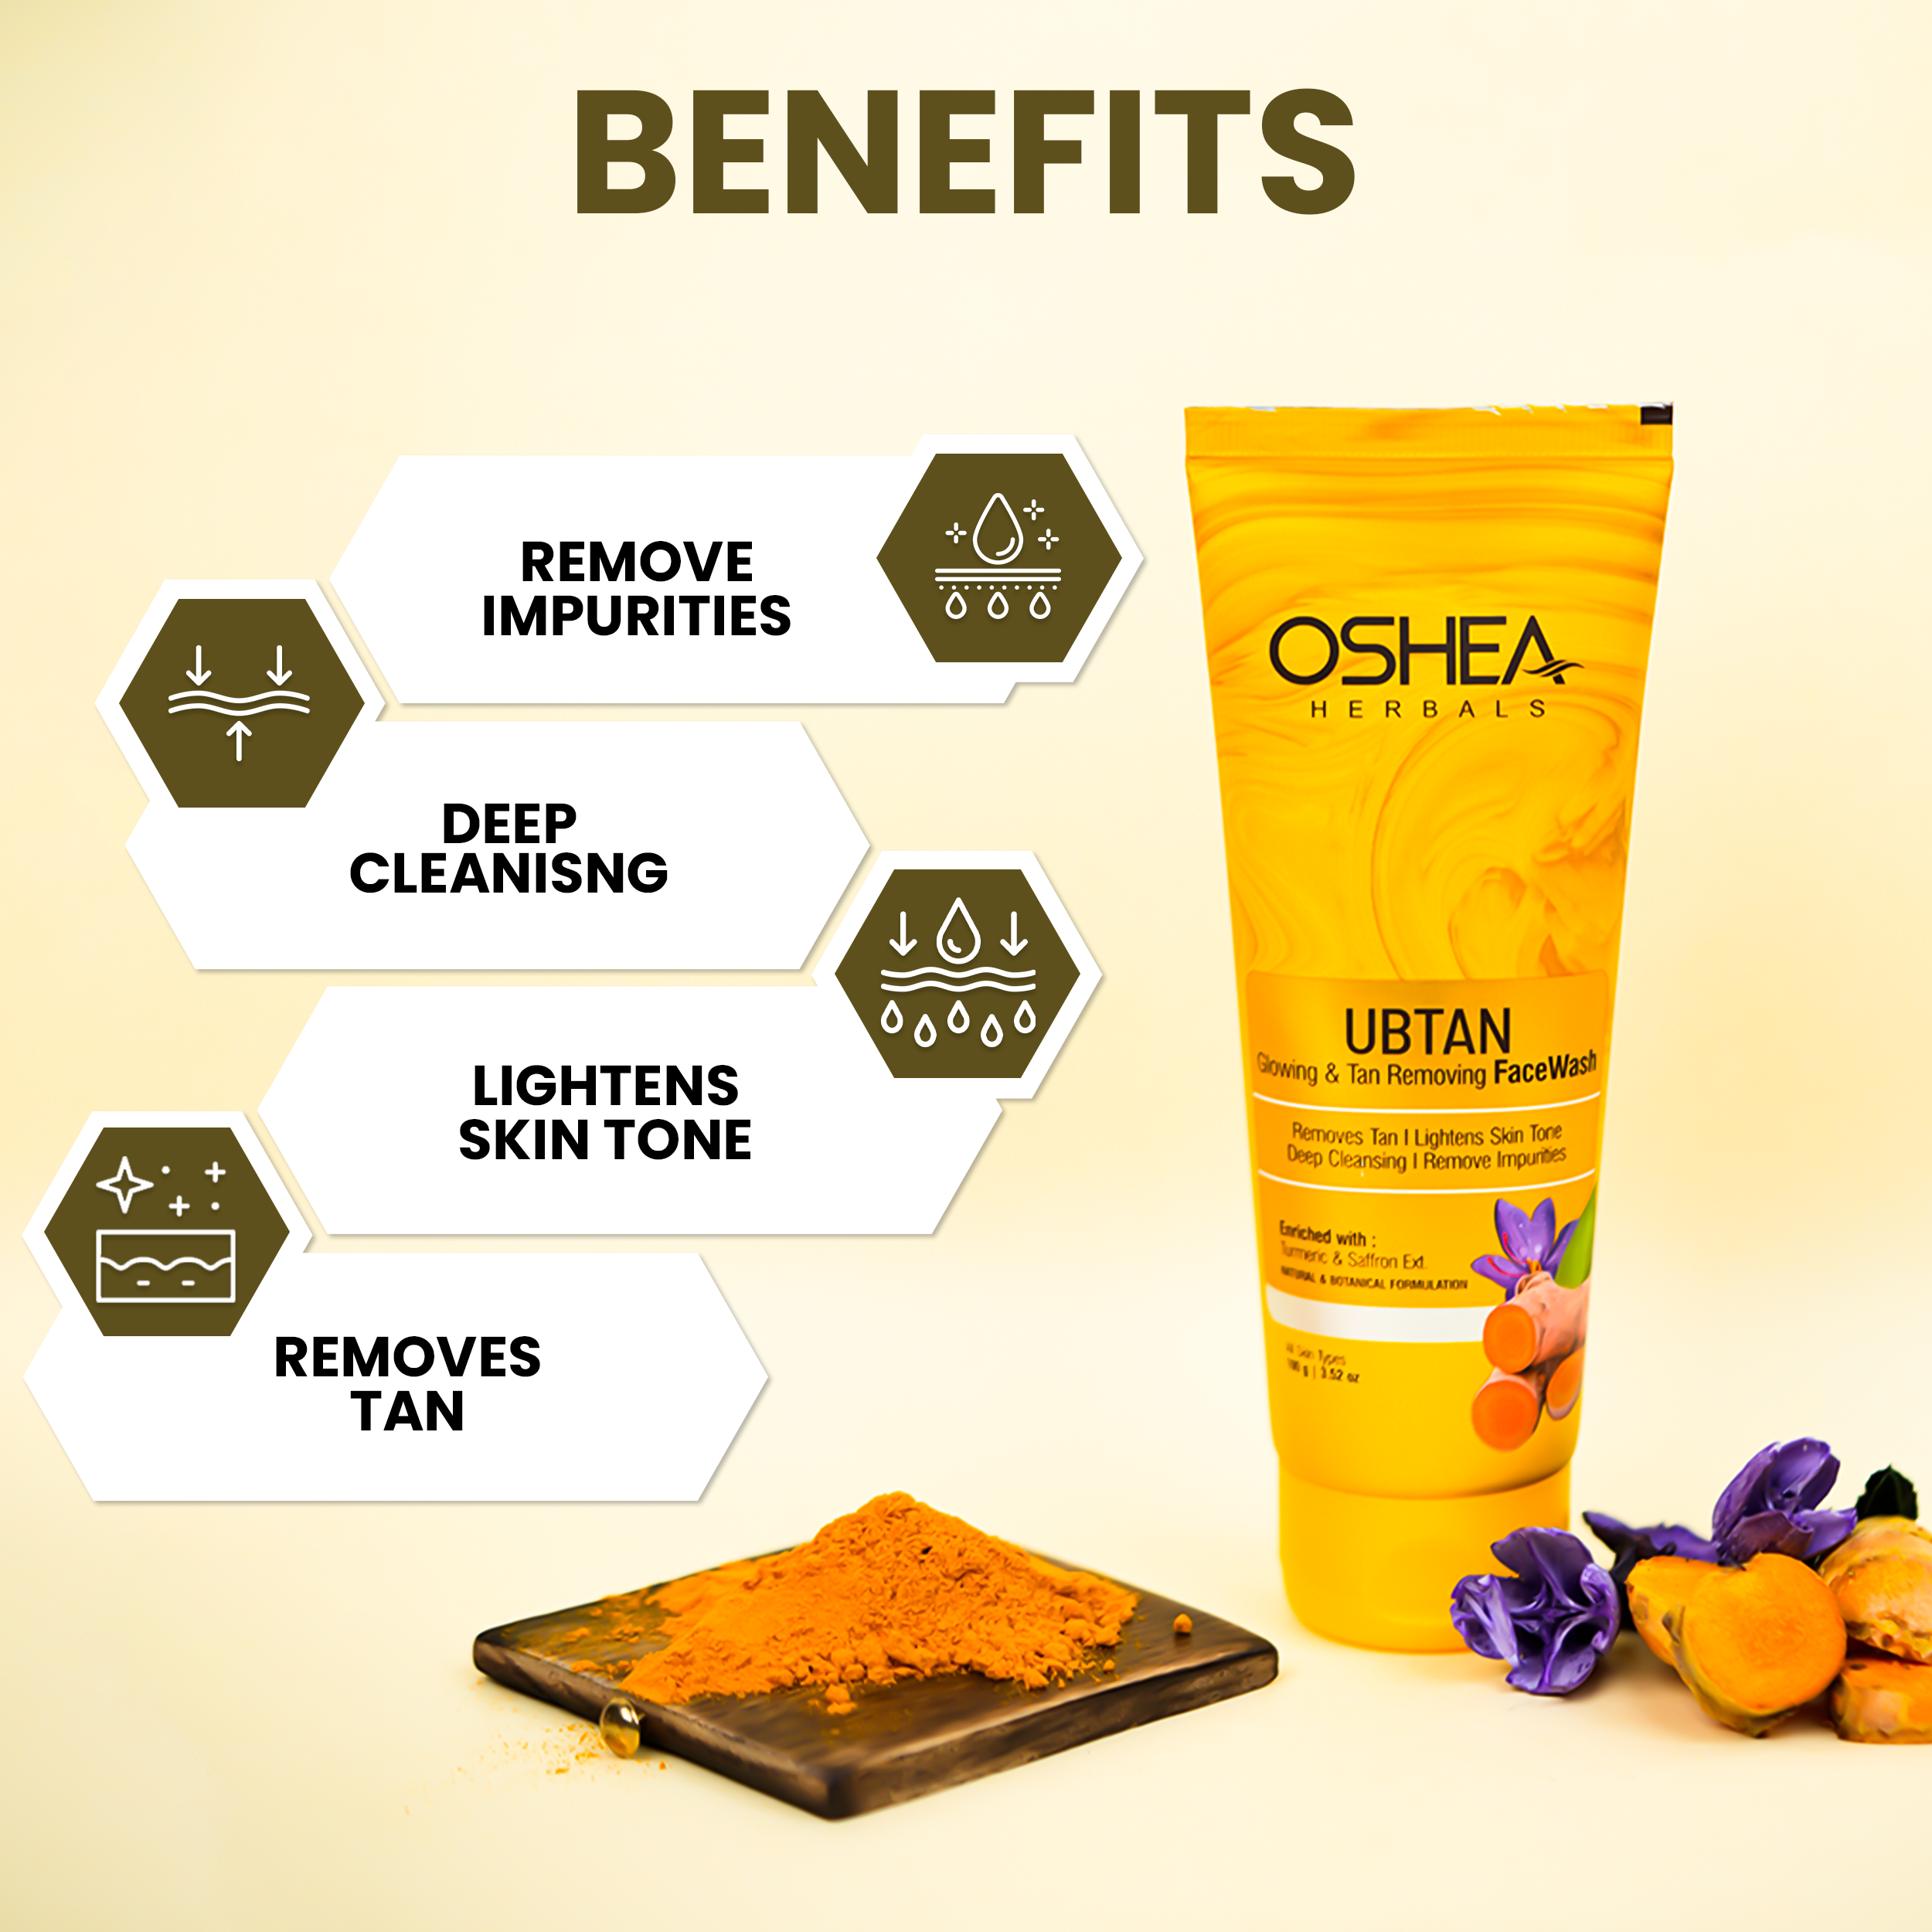 Benefits Ubtan Glowing & Tan Removing Face wash Oshea Herbals